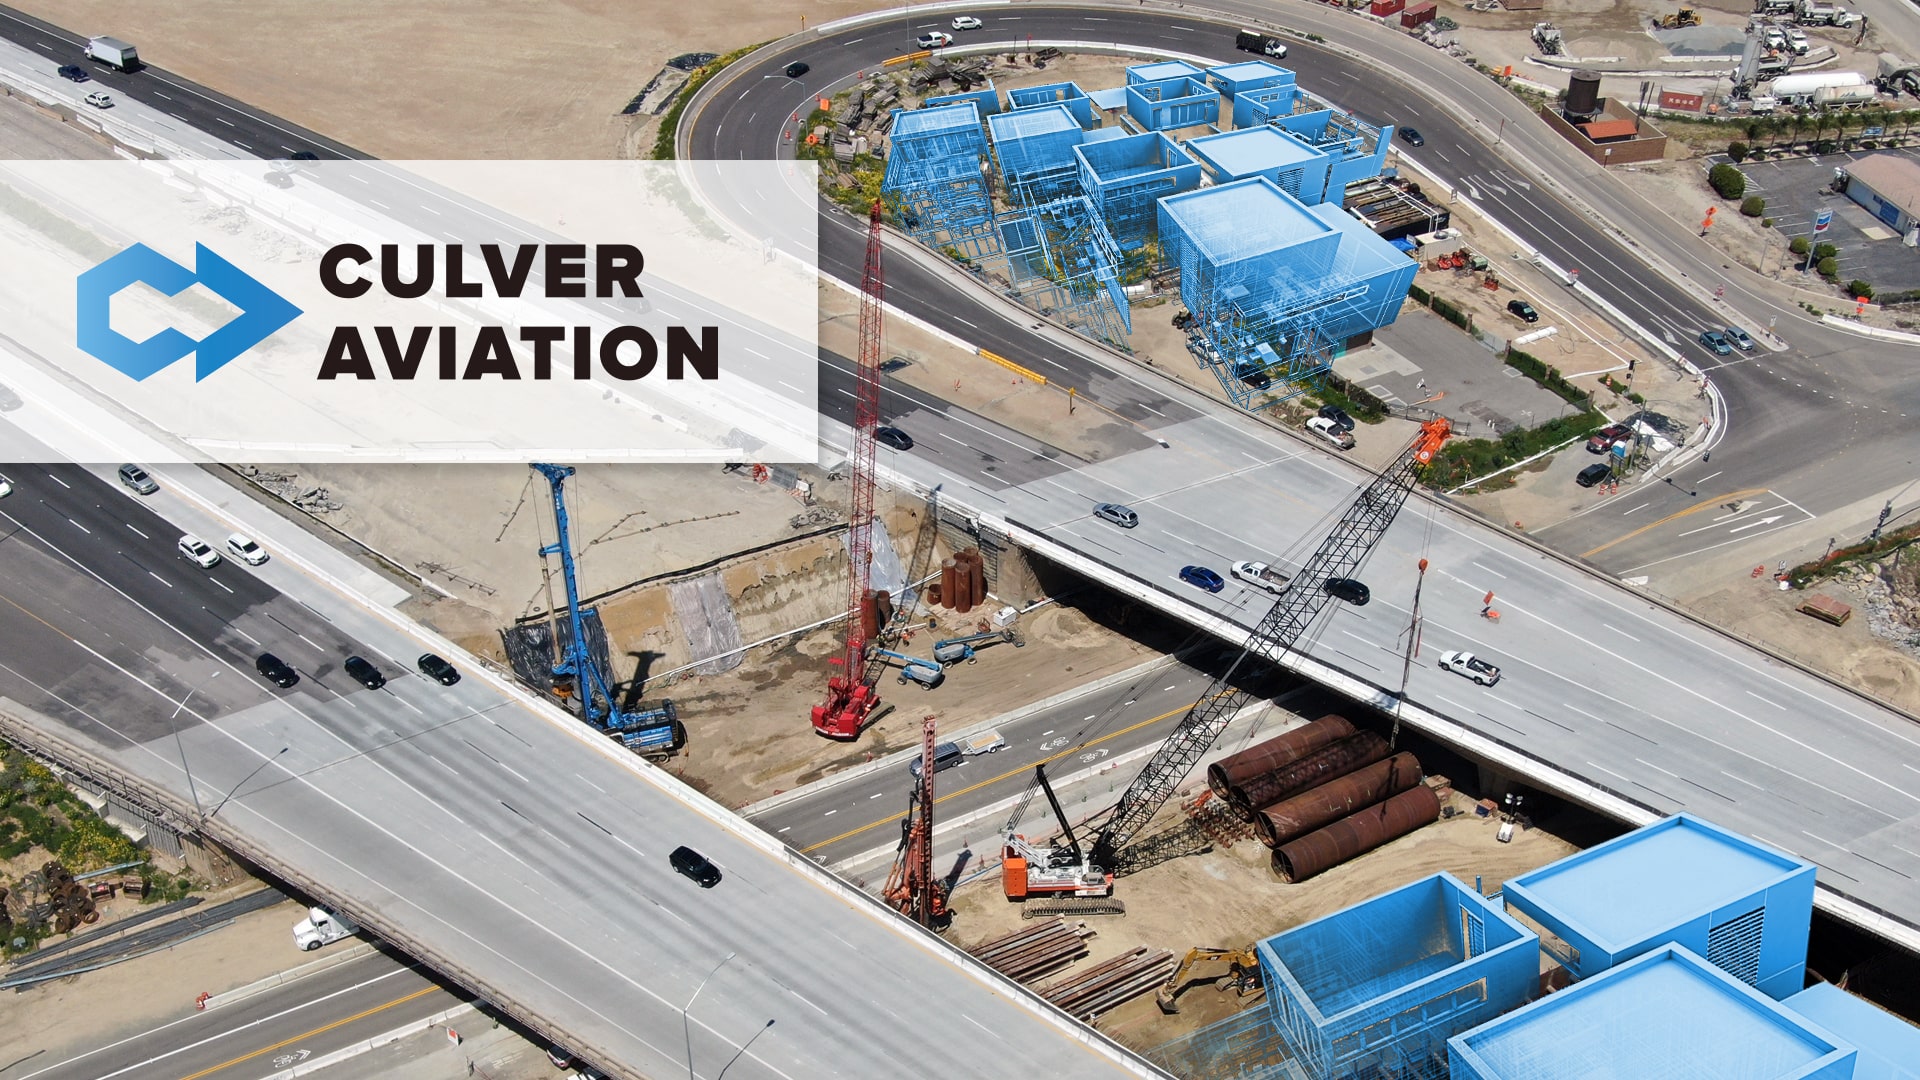 Culver Aviation